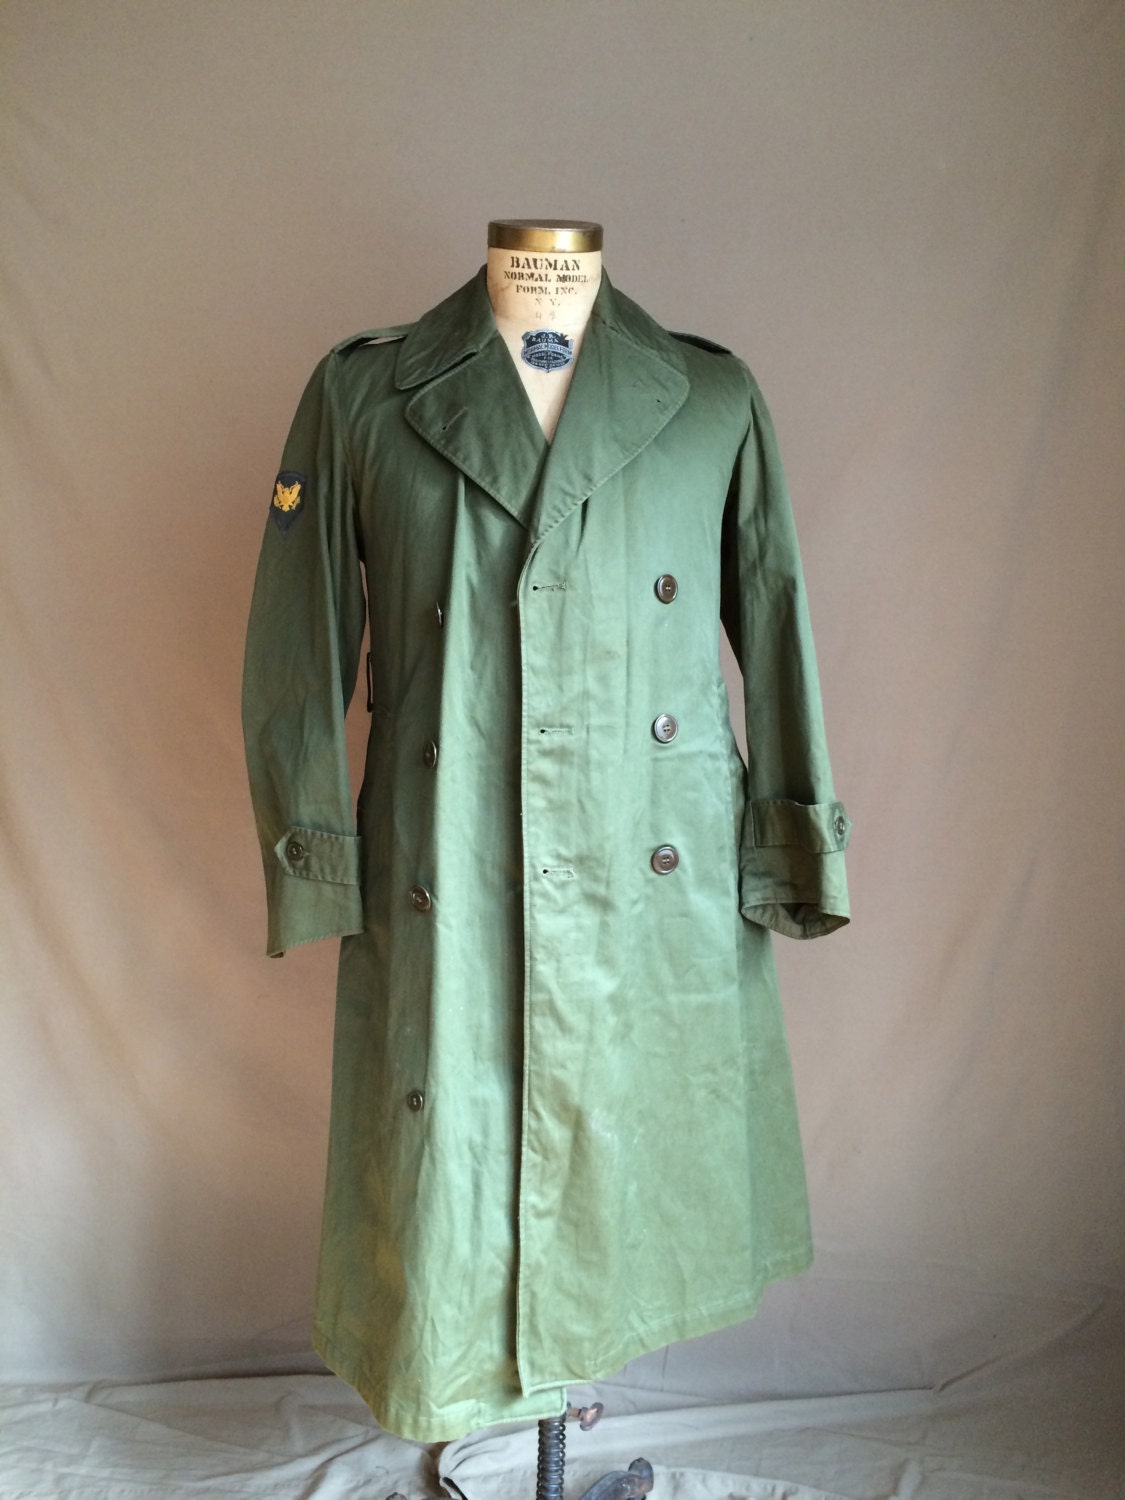 vintage 1950's military coat / overcoat / jacket / duster